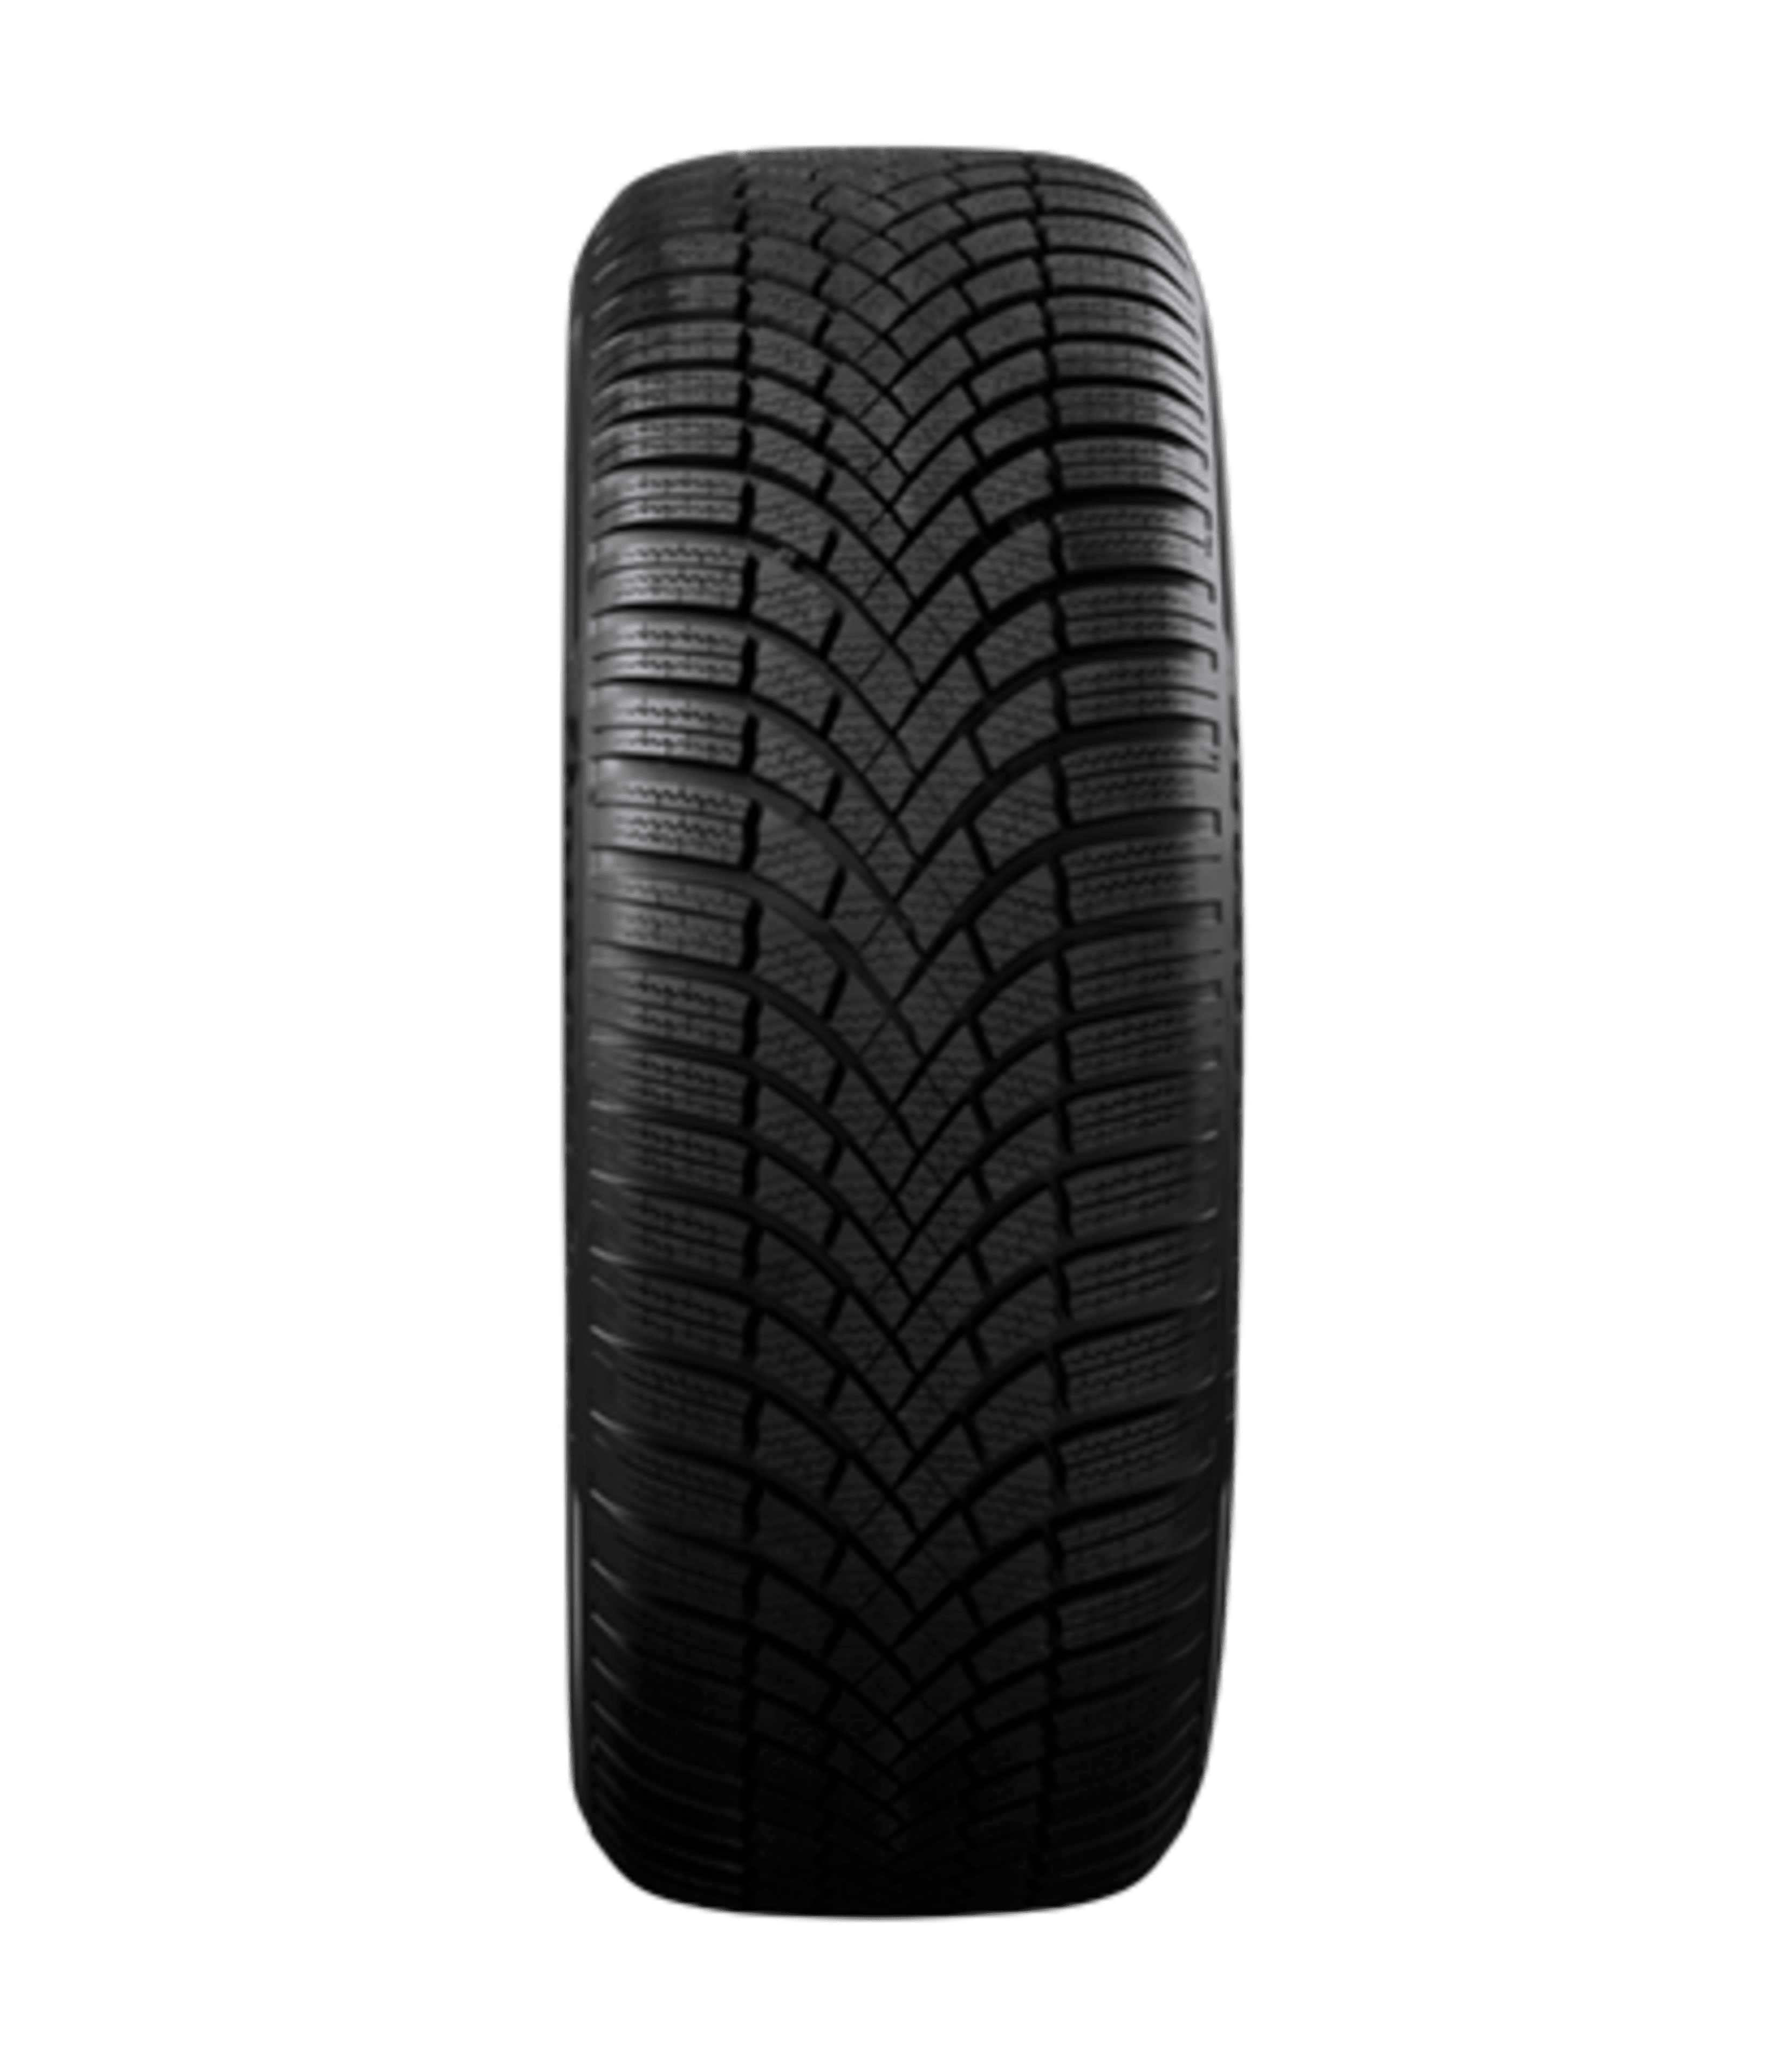 Buy Bridgestone Blizzak SimpleTire Online Tires LM005 